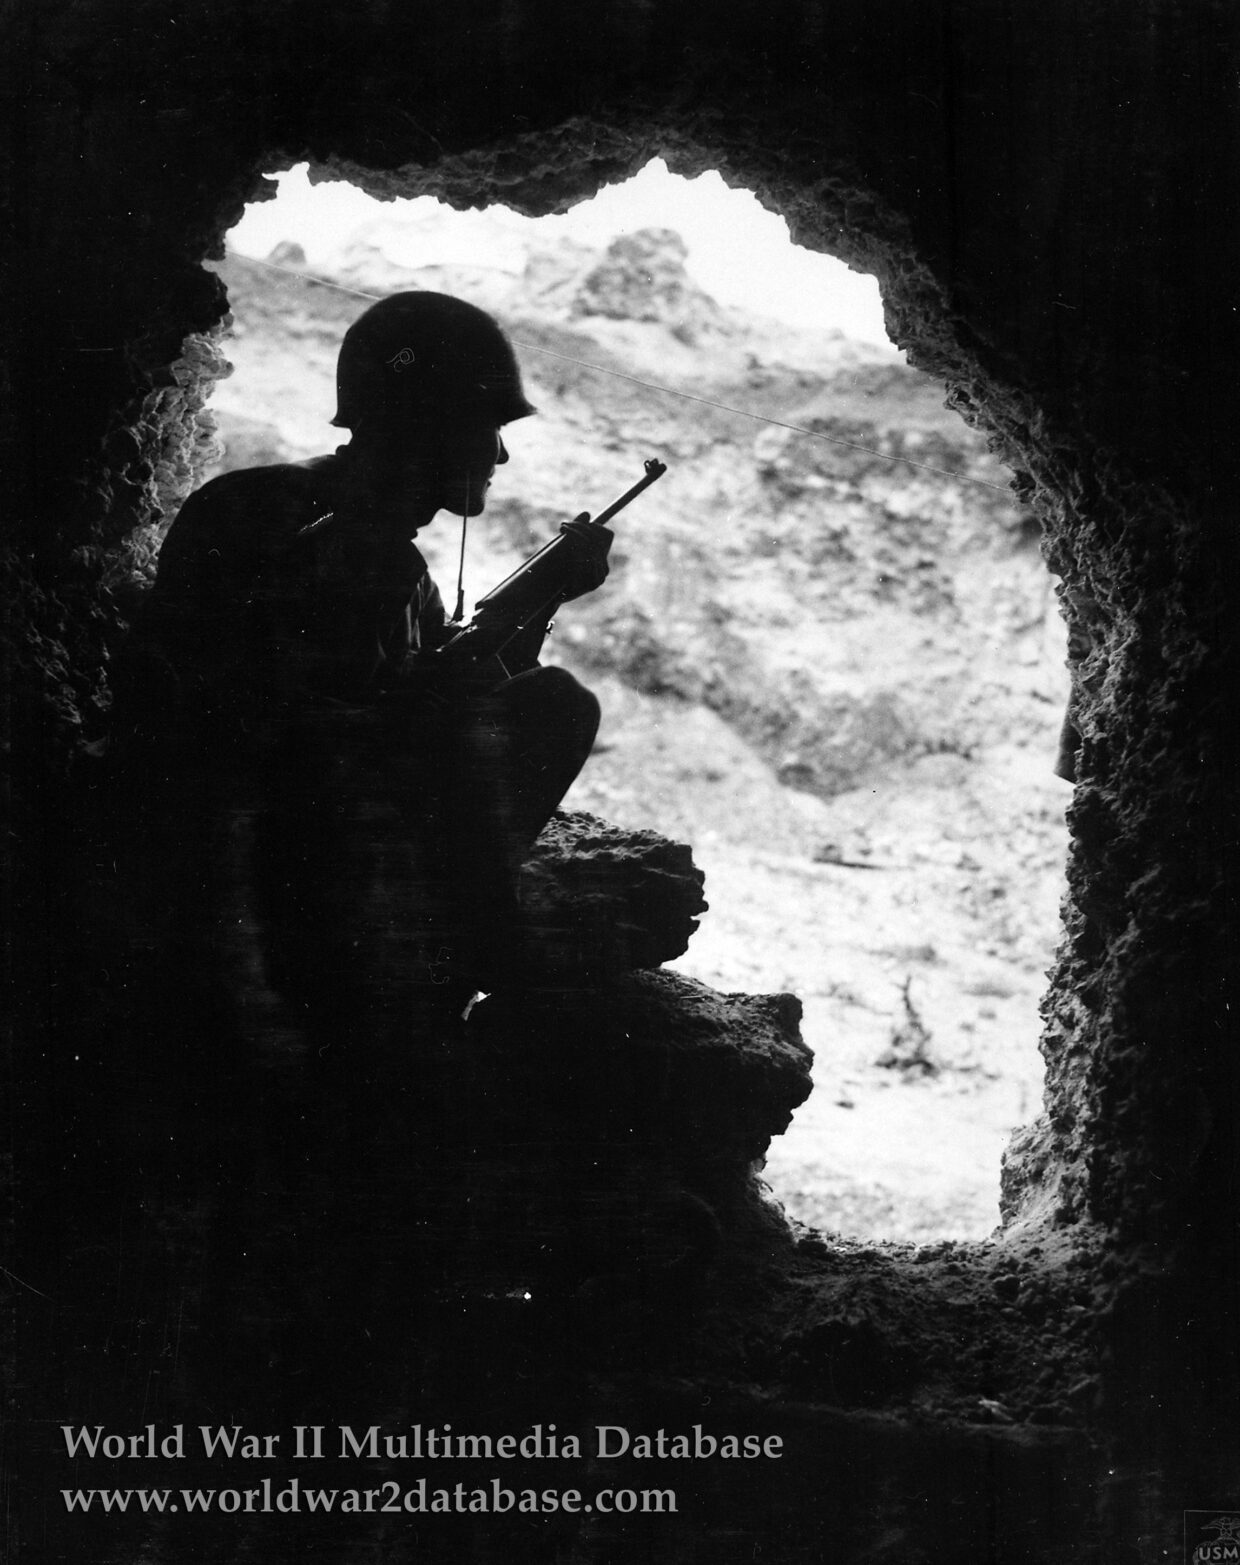 United States Marine Sniper in Okinawan Cave